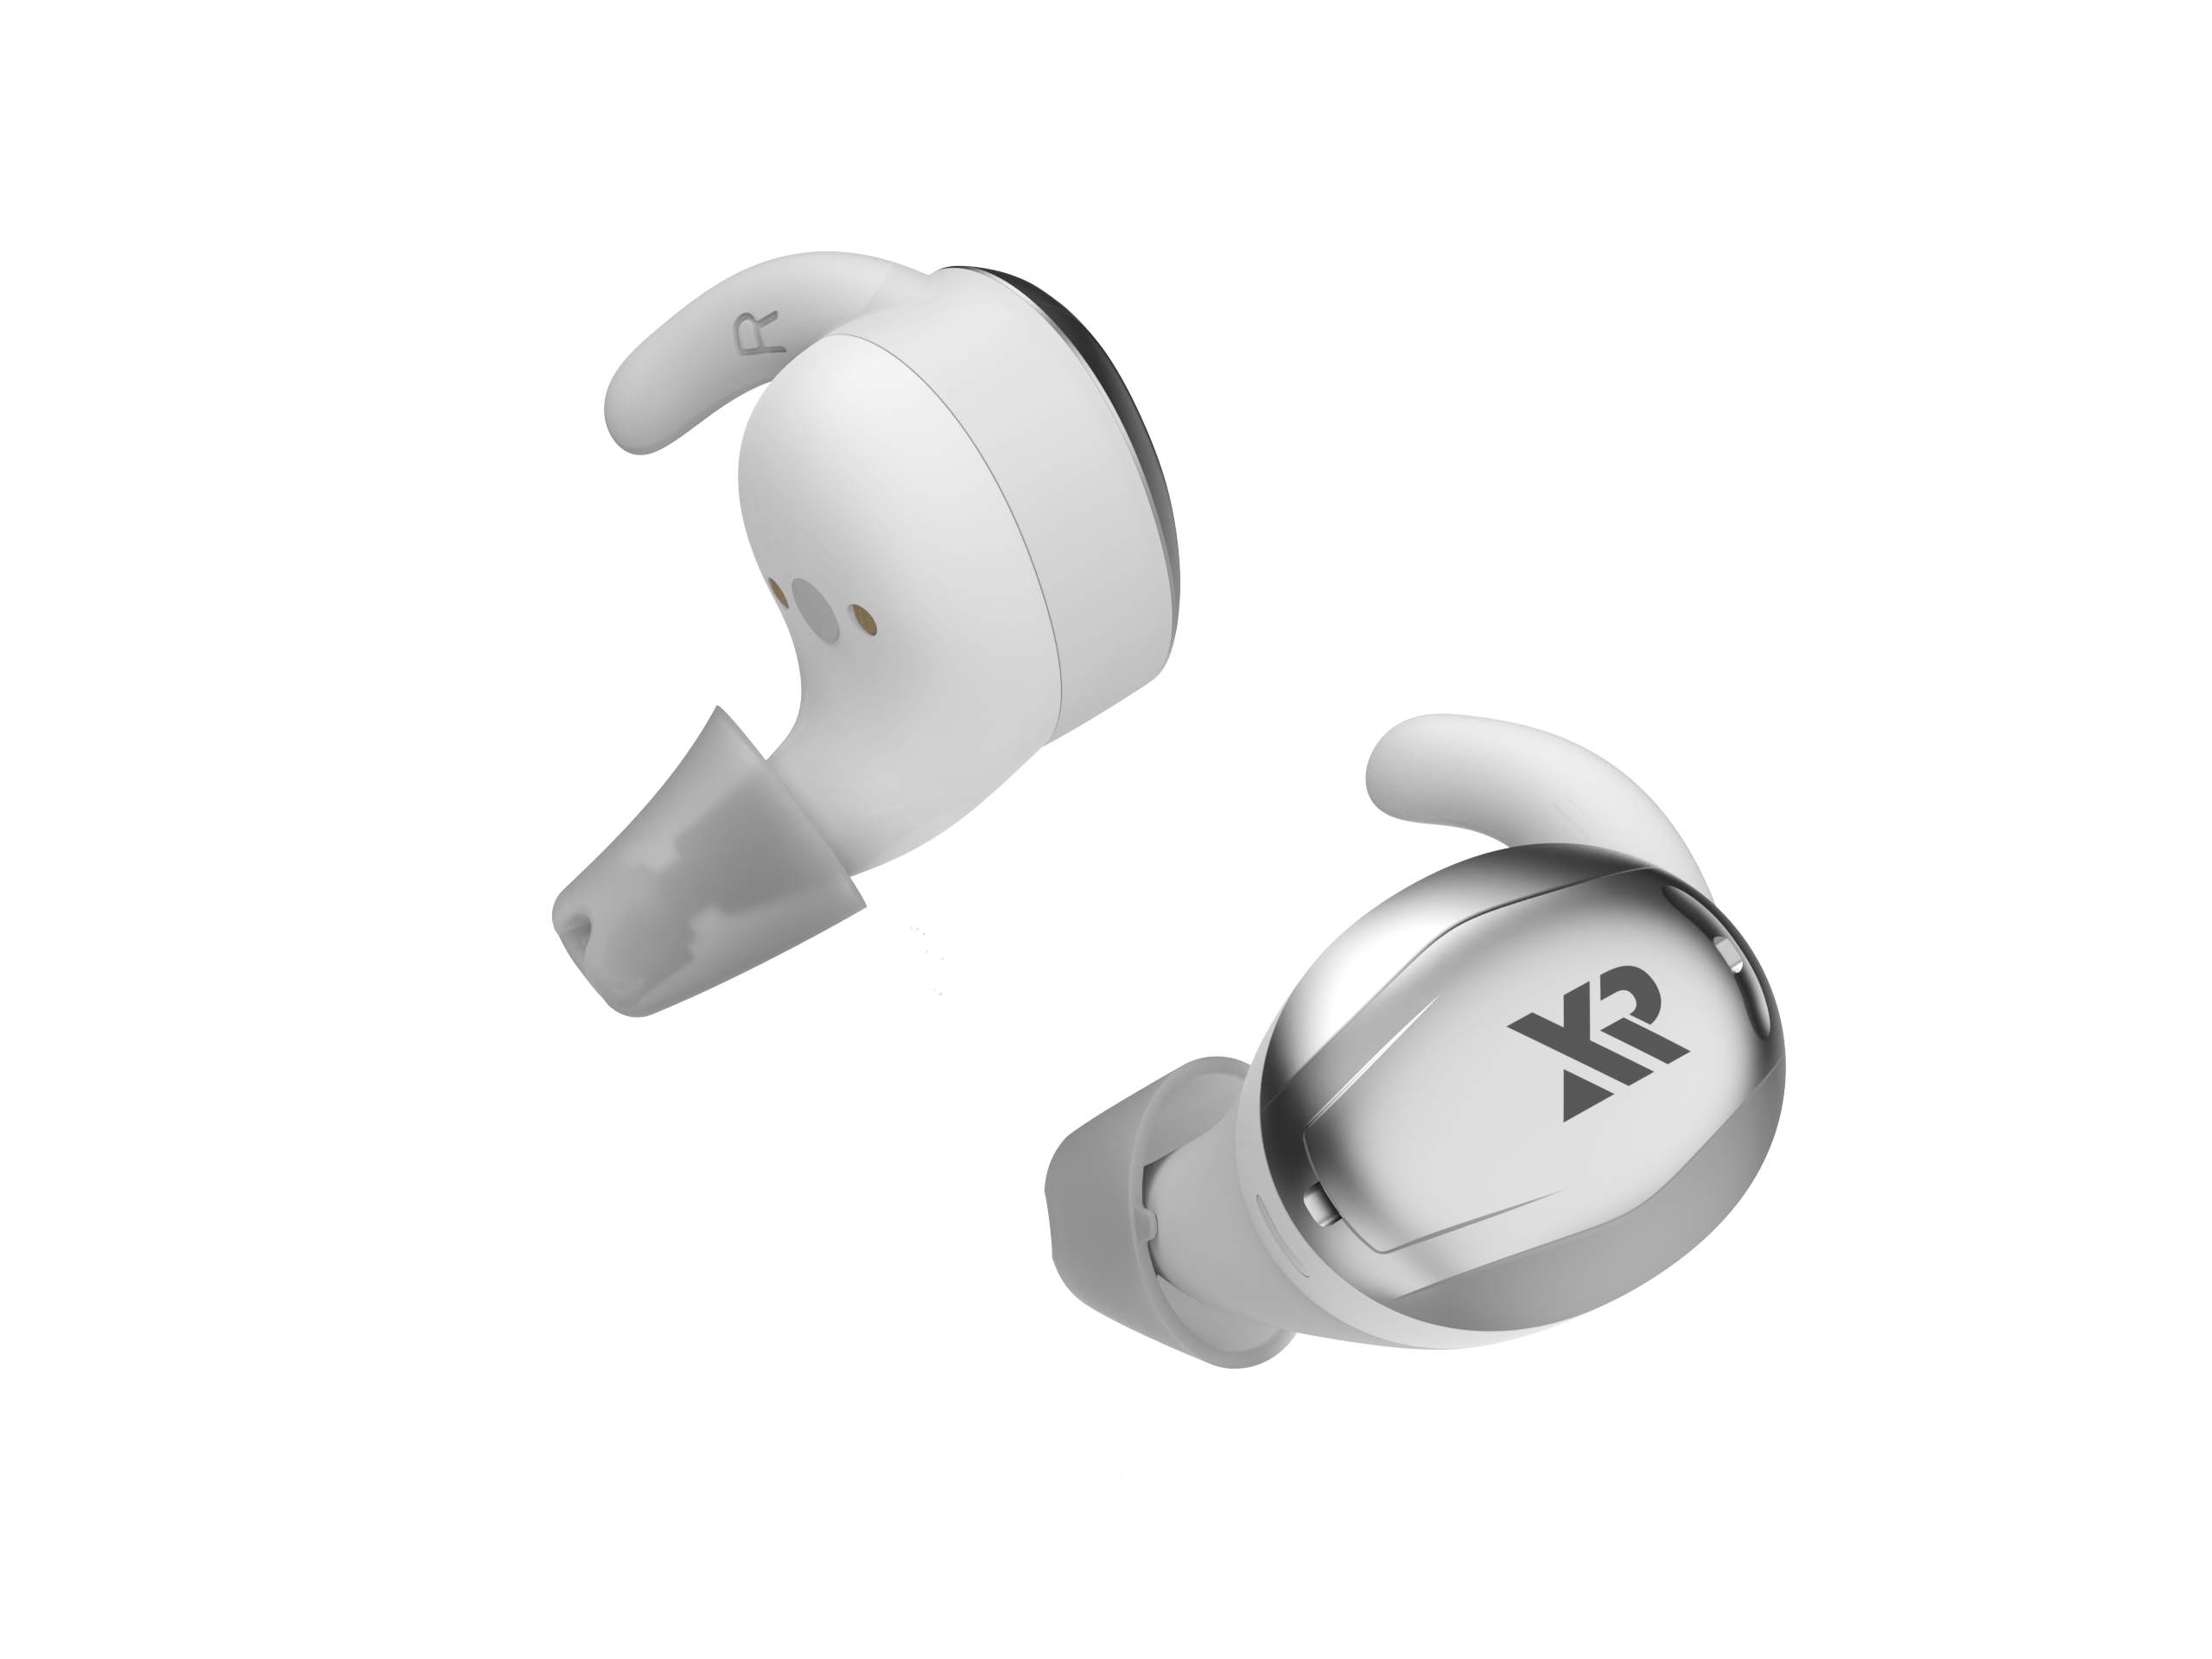 HEAR 2
Smart WirelessOTC Hearing Aid
